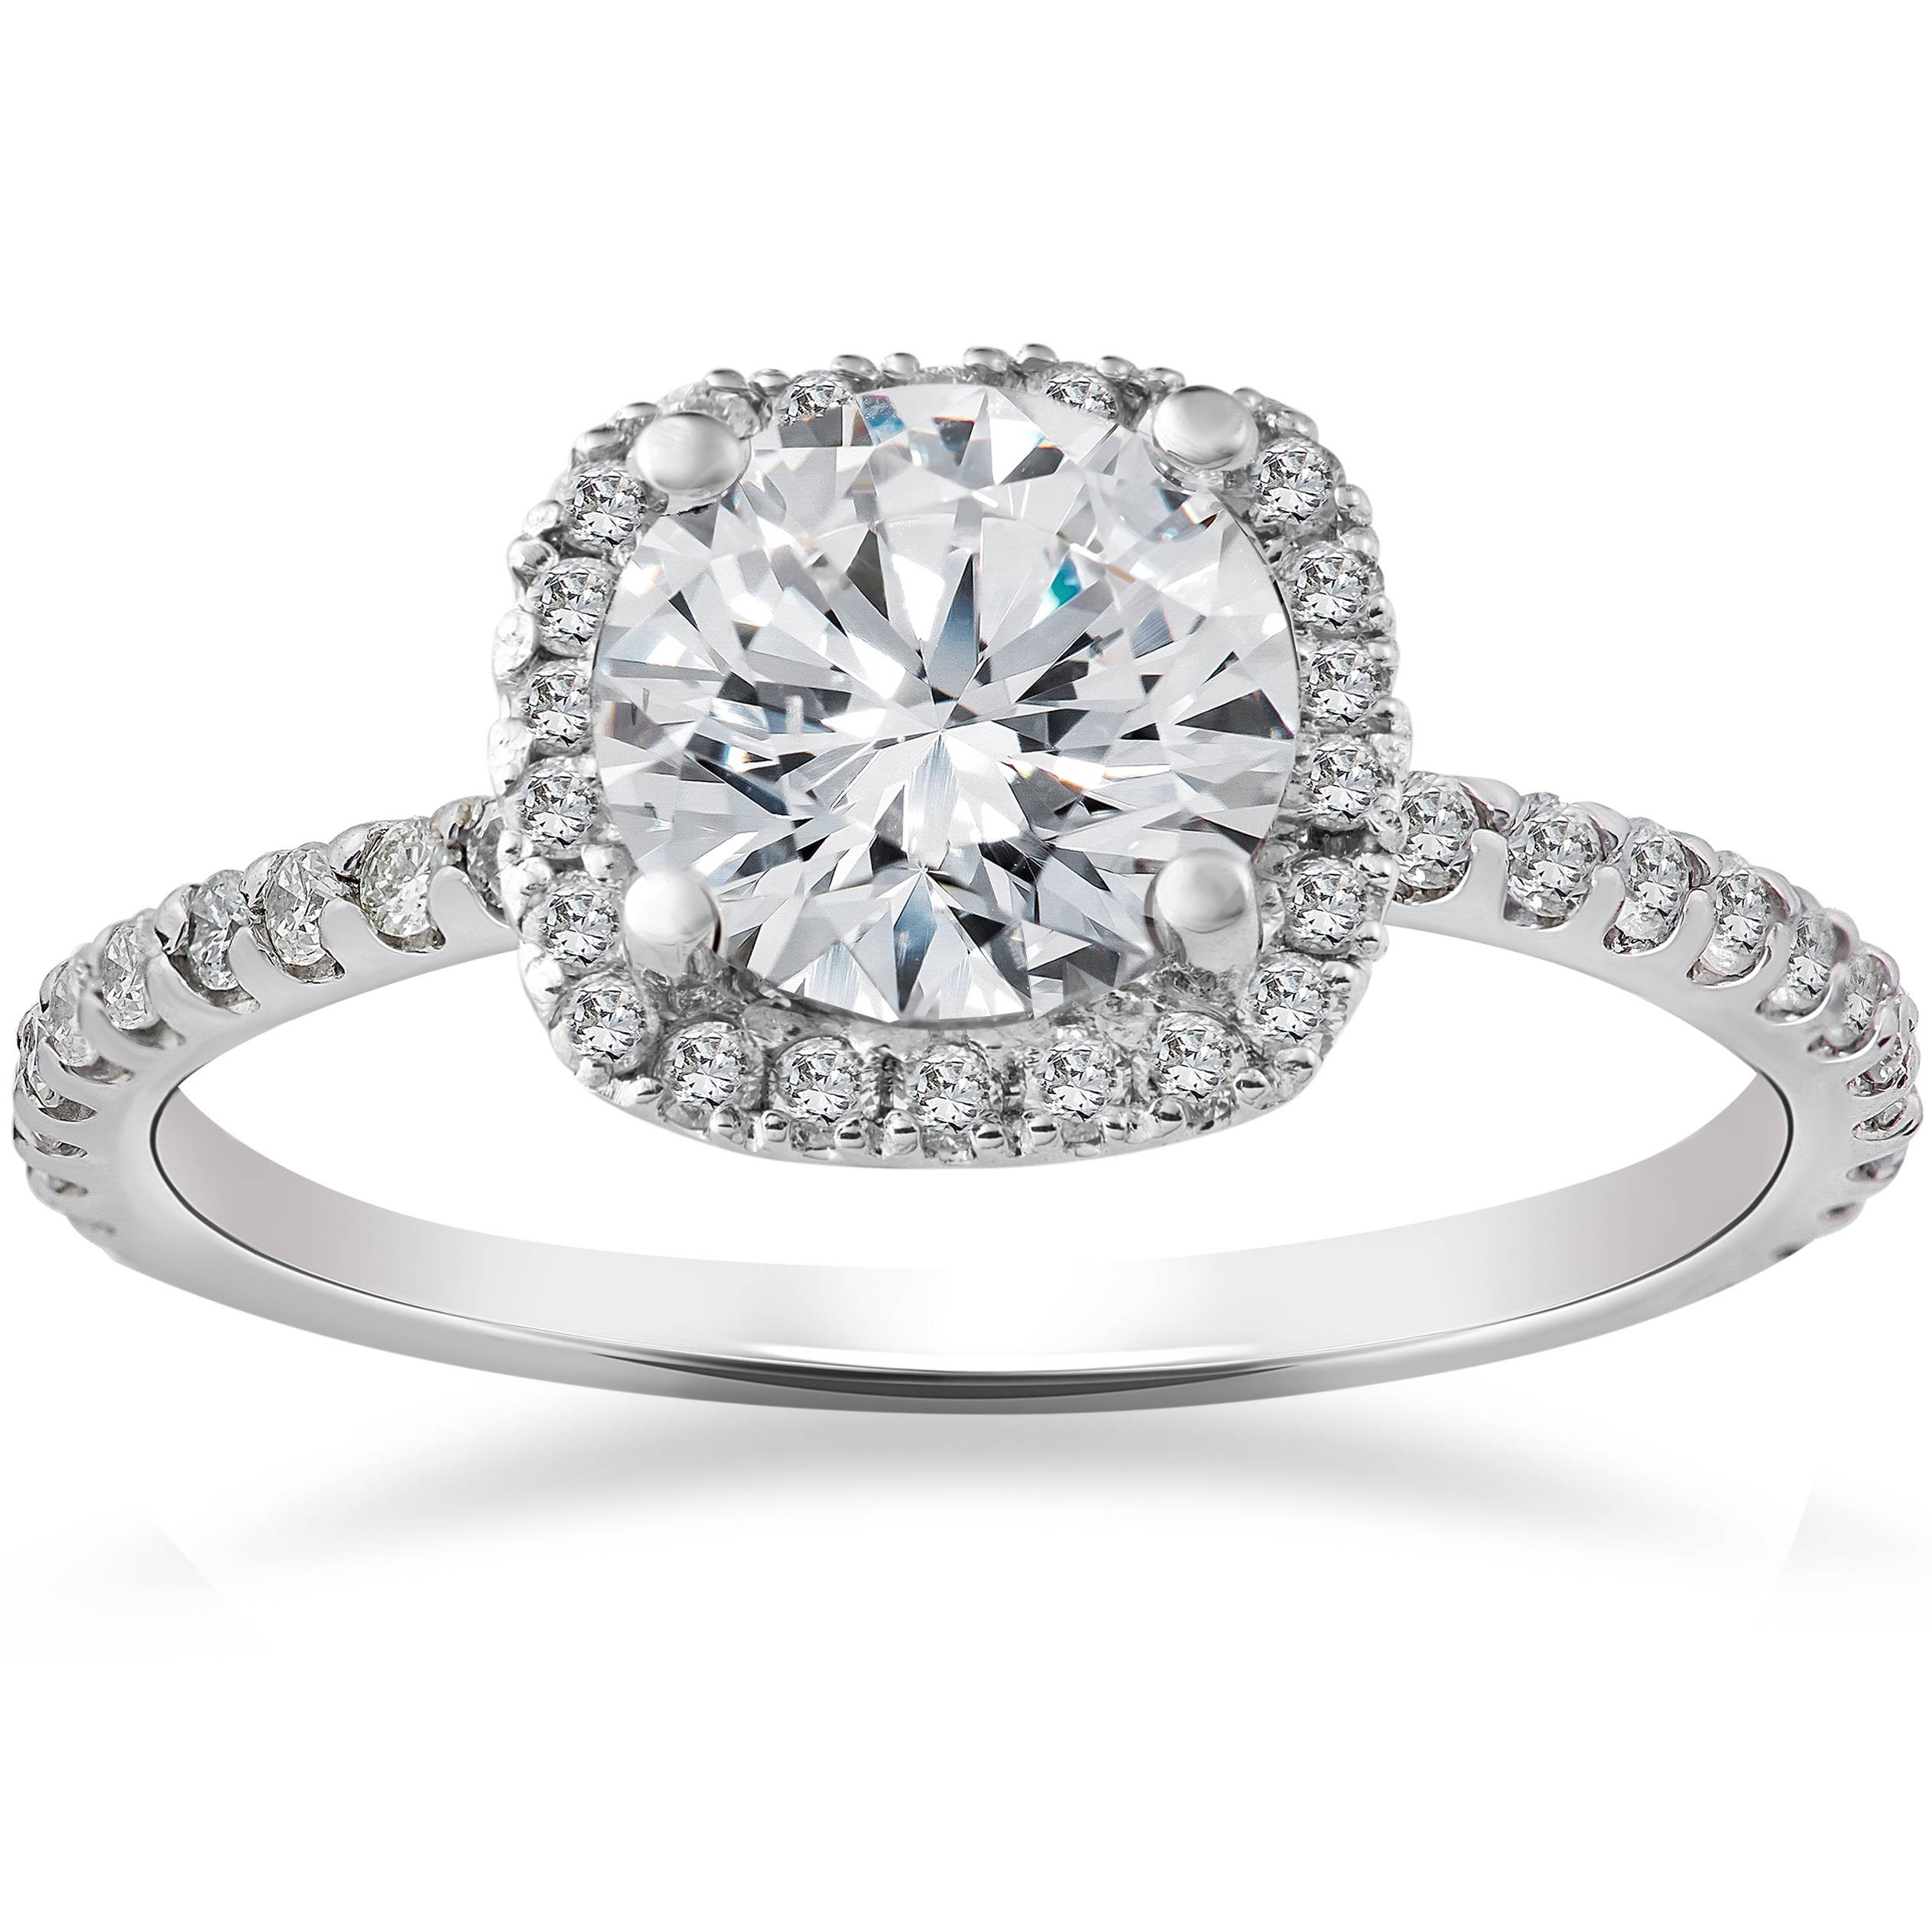 Halo Diamond Engagement Rings
 2 Carat Cushion Halo Enhanced Diamond Engagement Ring 14K